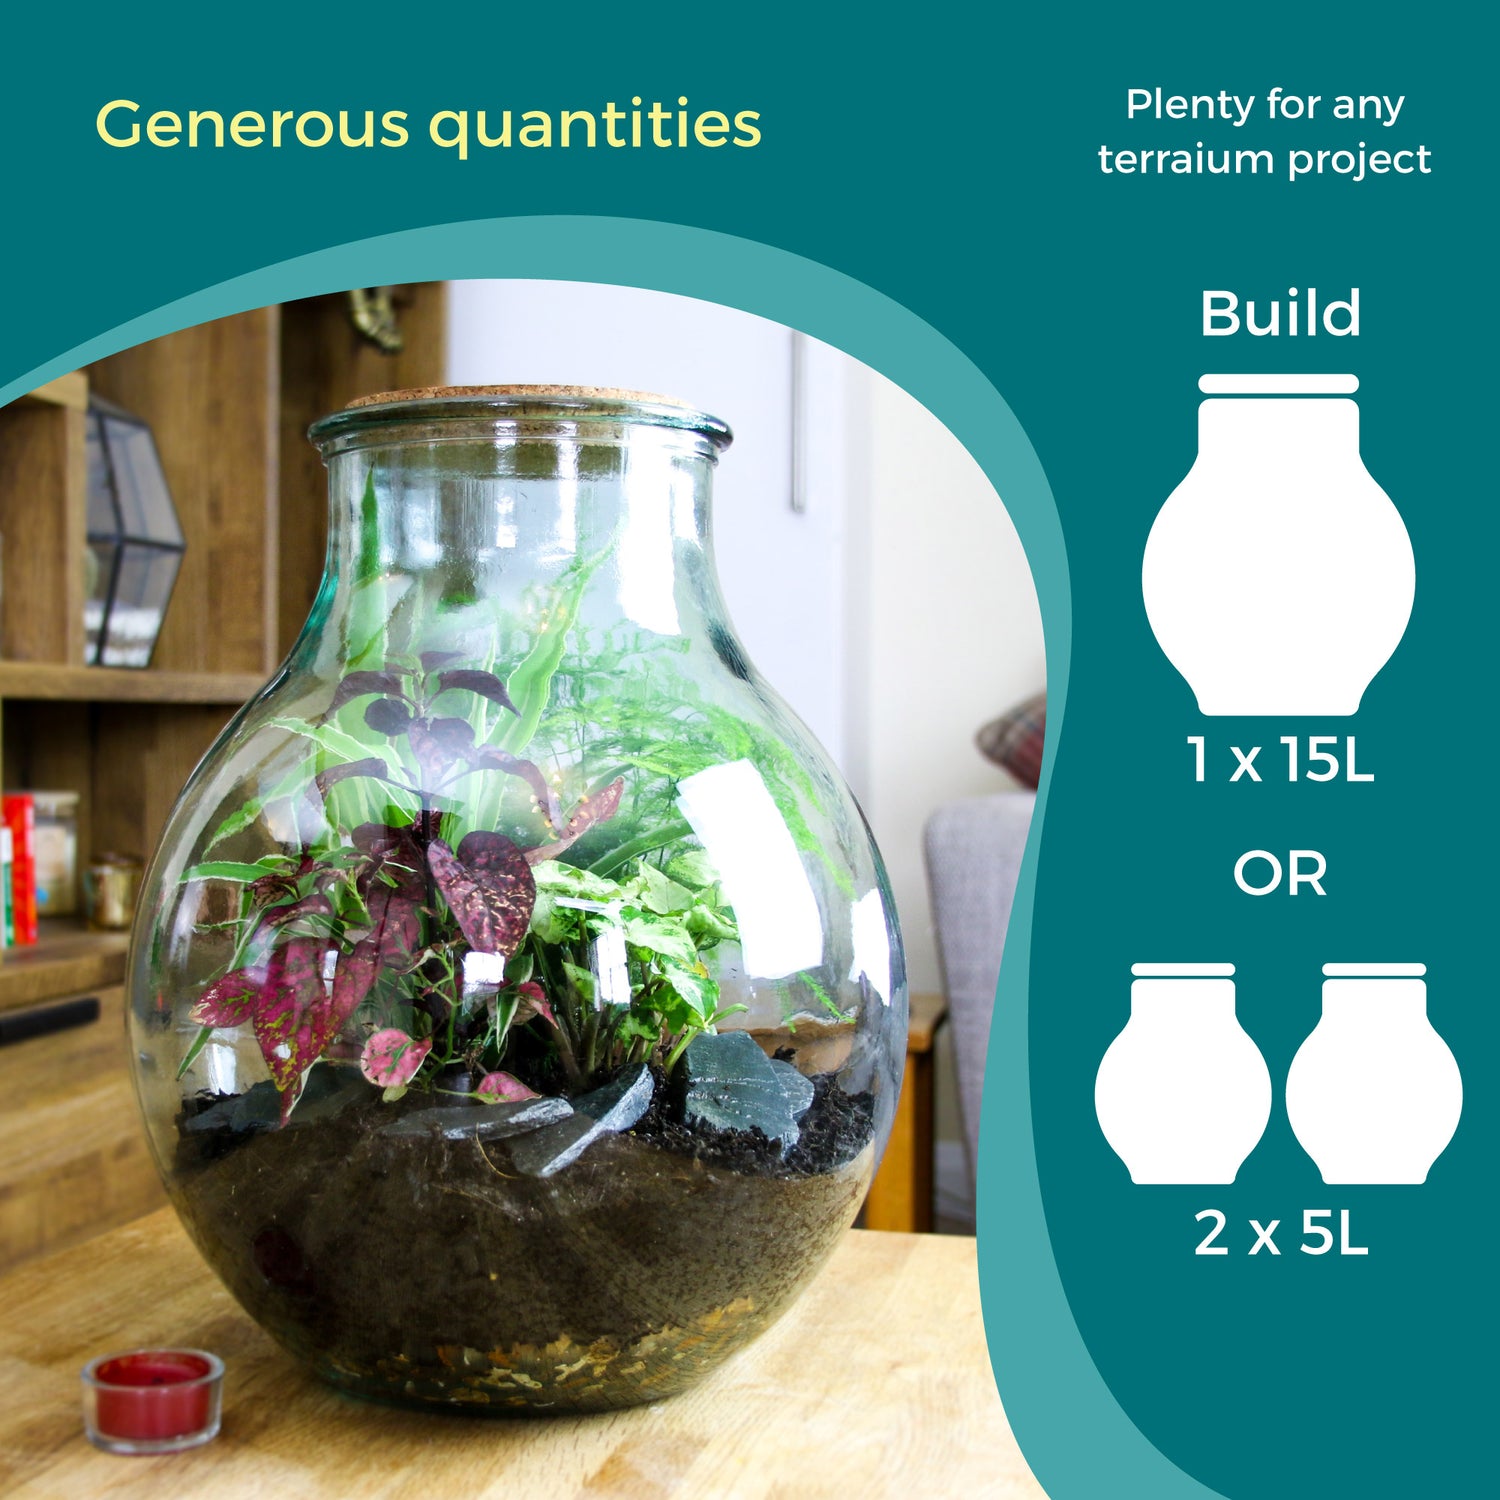 Buy terrarium kit contents, soil and gravel